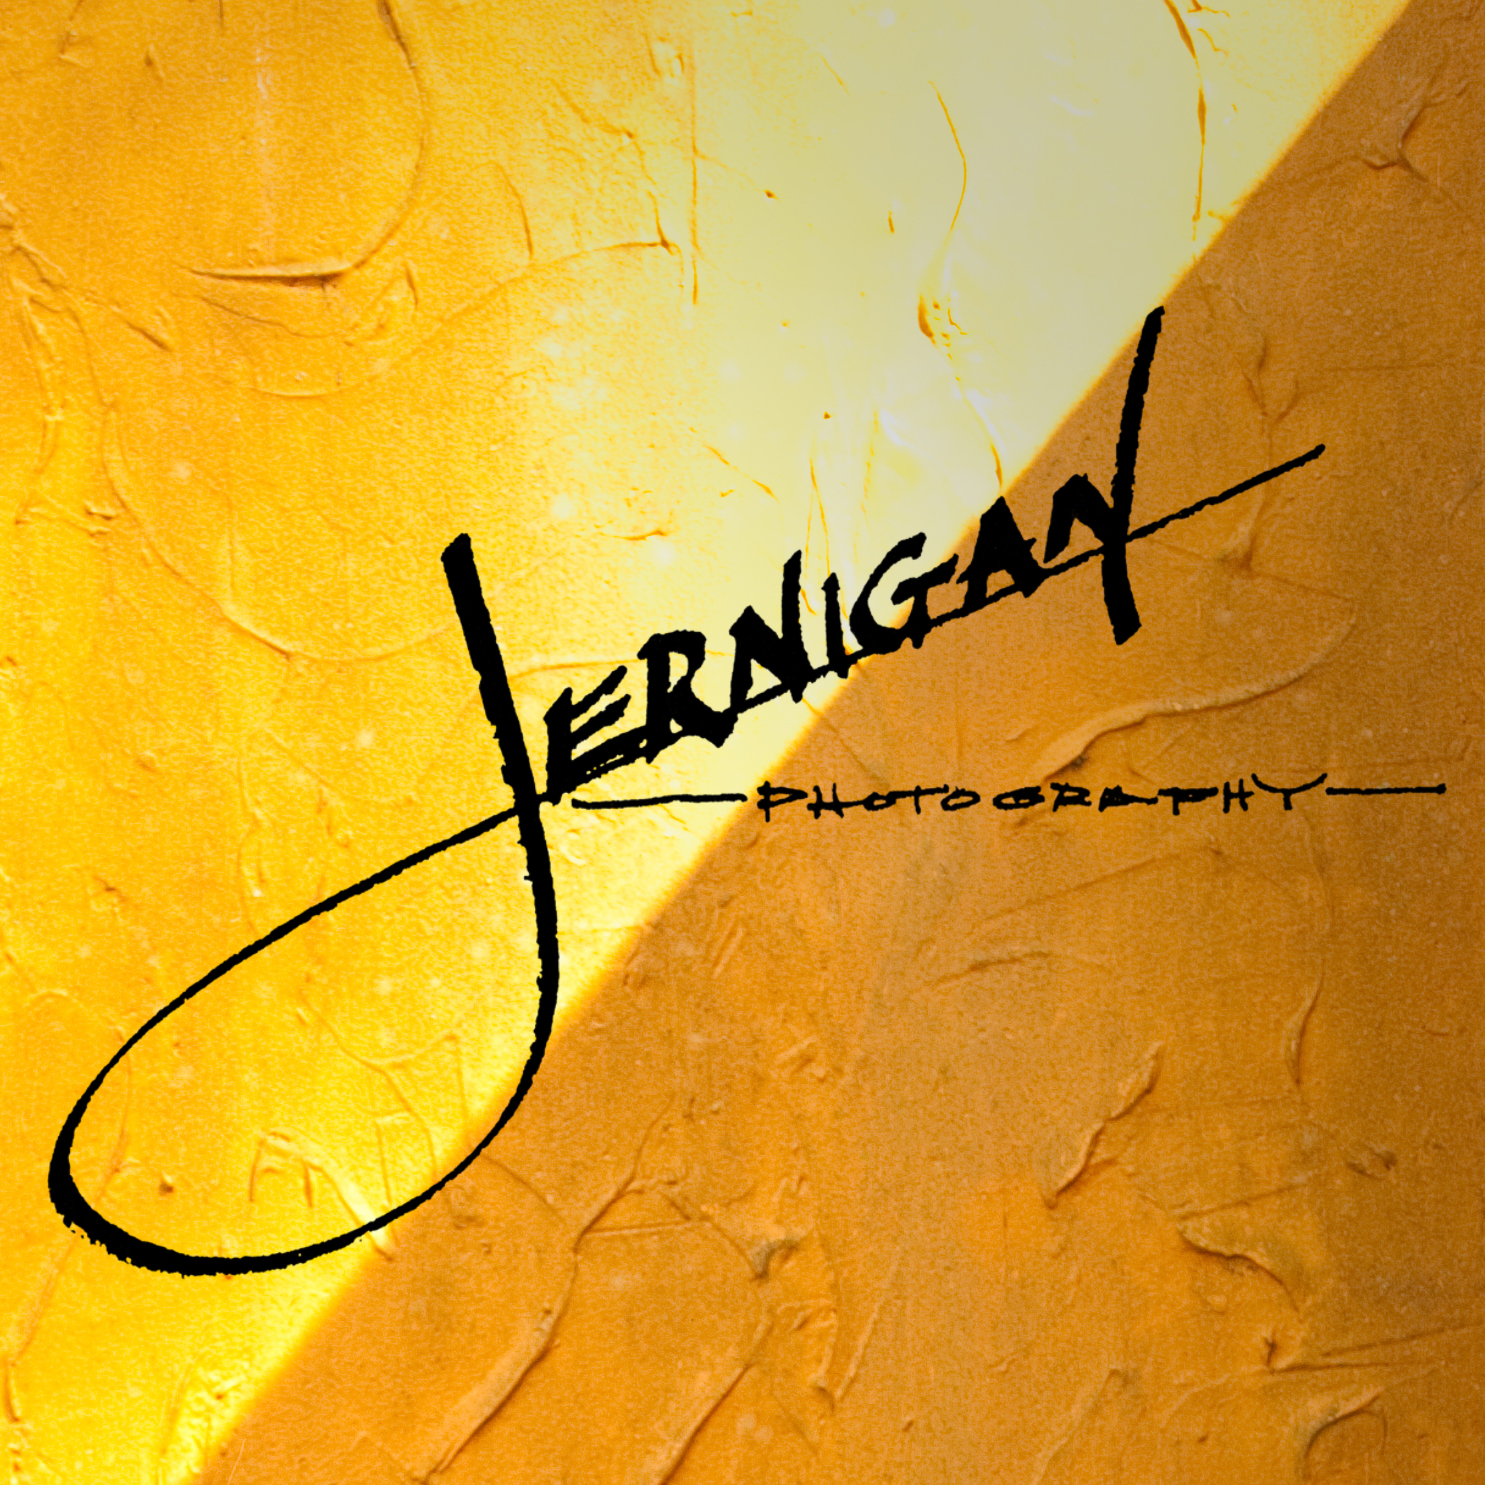 Jernigan Photography Podcast